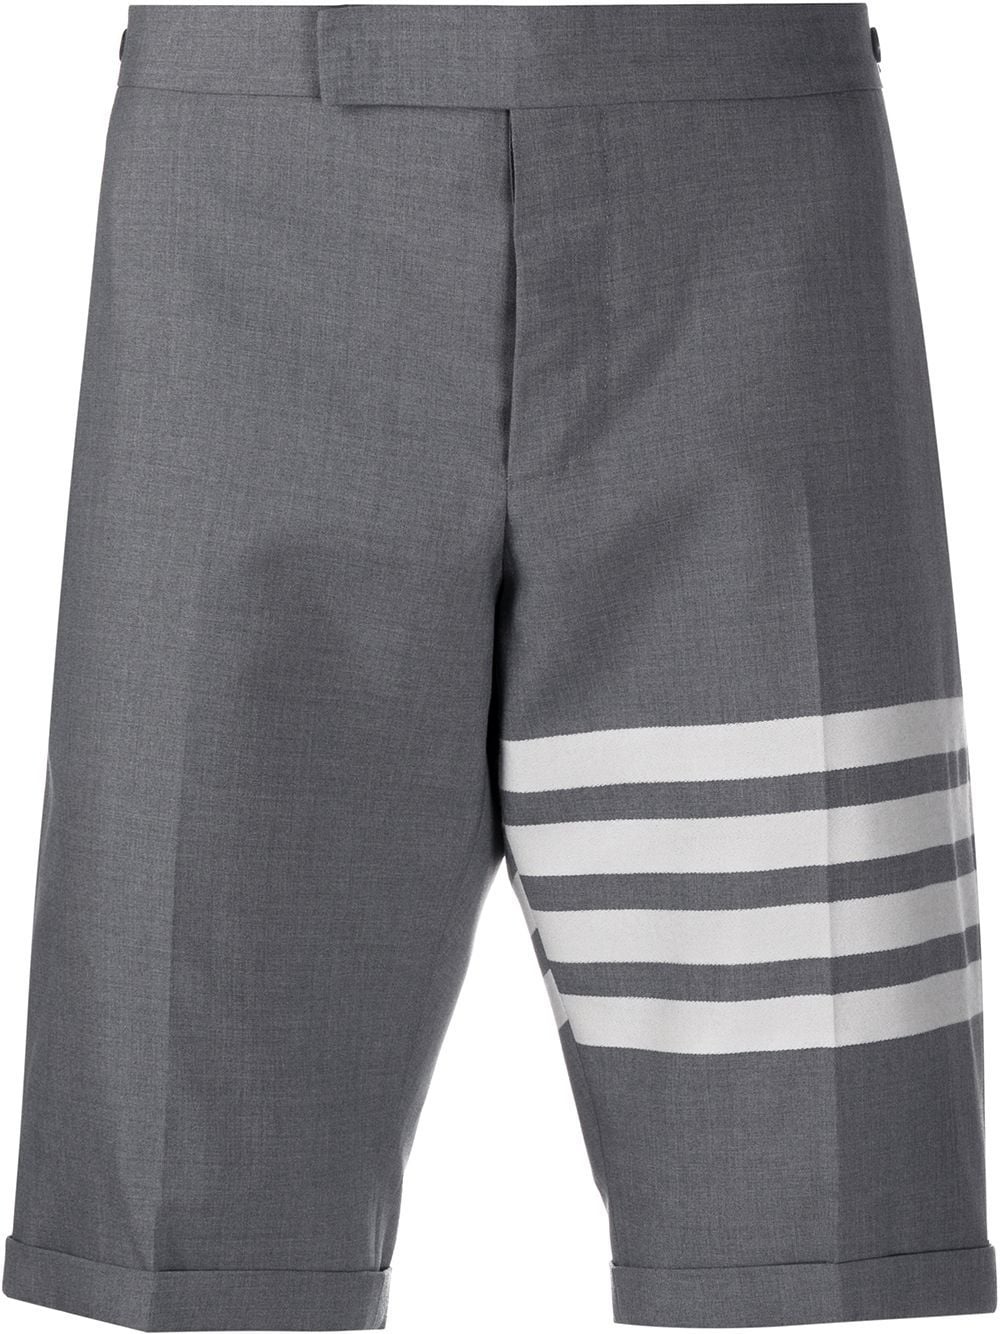 4-Bar plain weave suiting shorts - 1